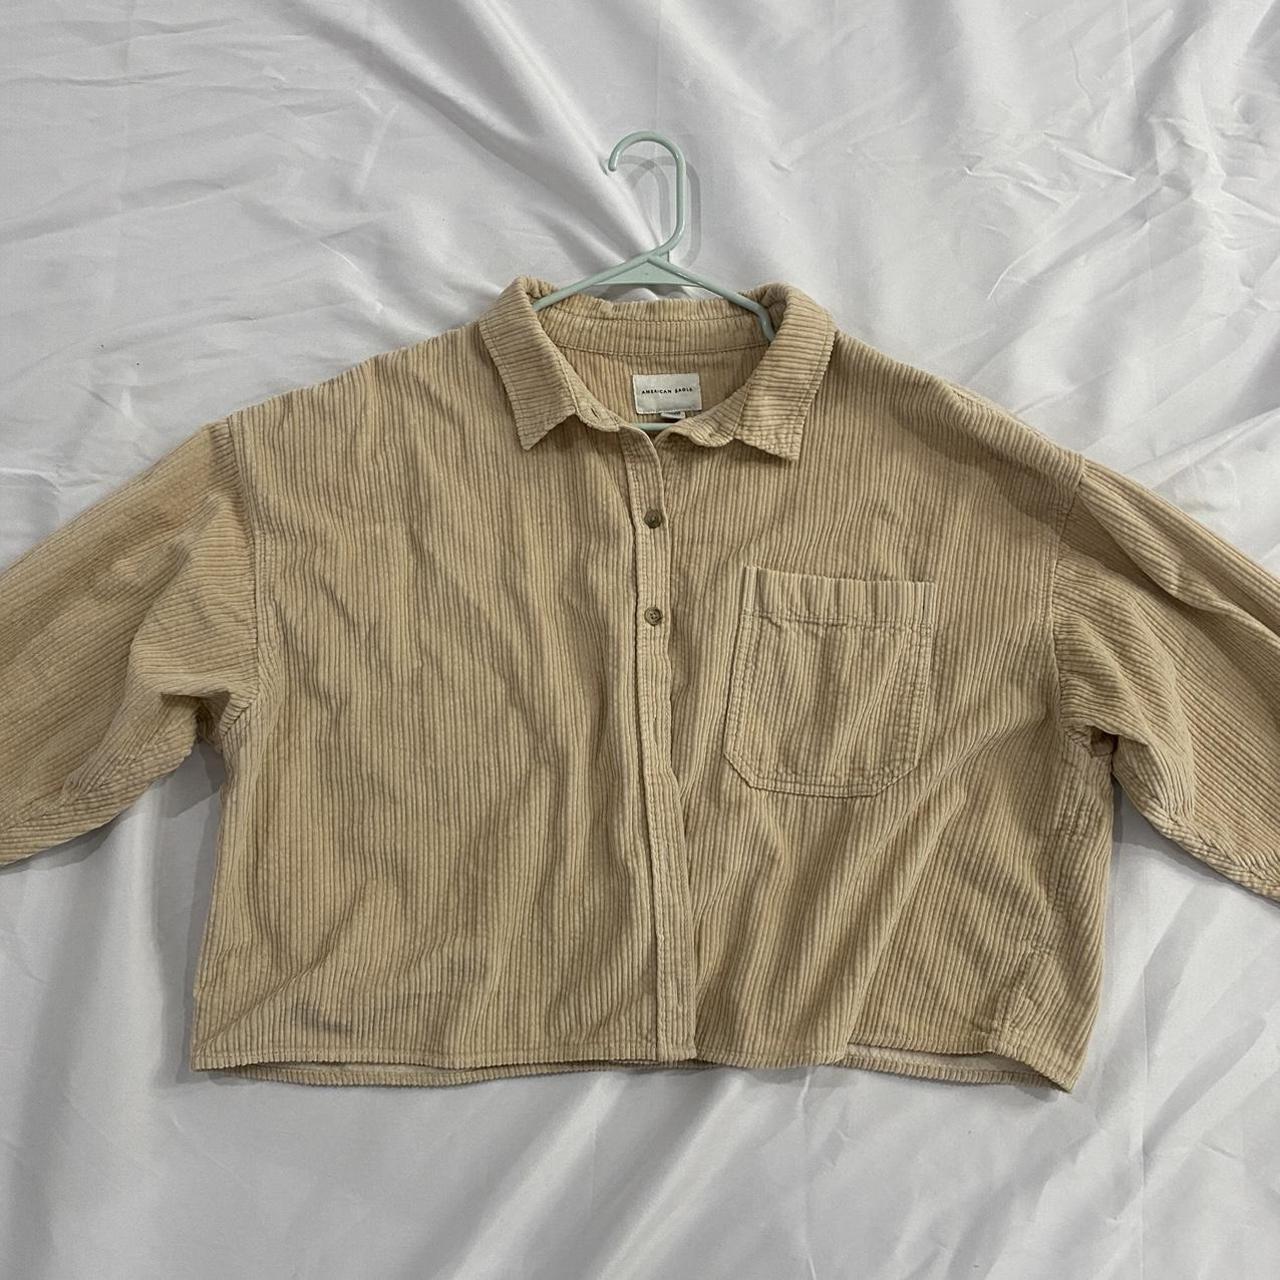 American Eagle Corduroy shirt/jacket - Depop